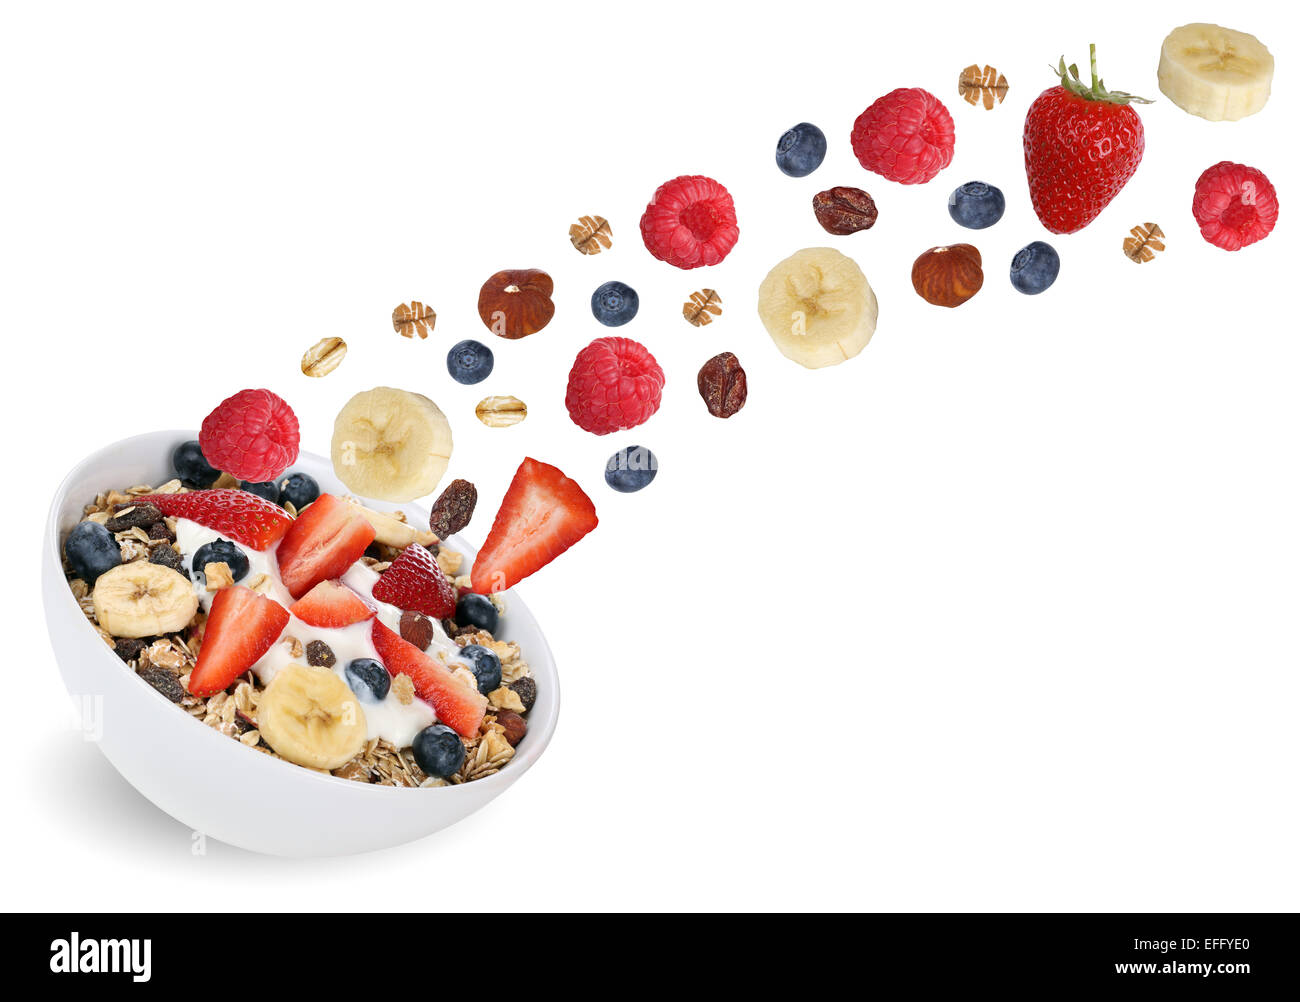 Flying fruit muesli for breakfast with fruits like raspberry, blueberries, banana and strawberry Stock Photo